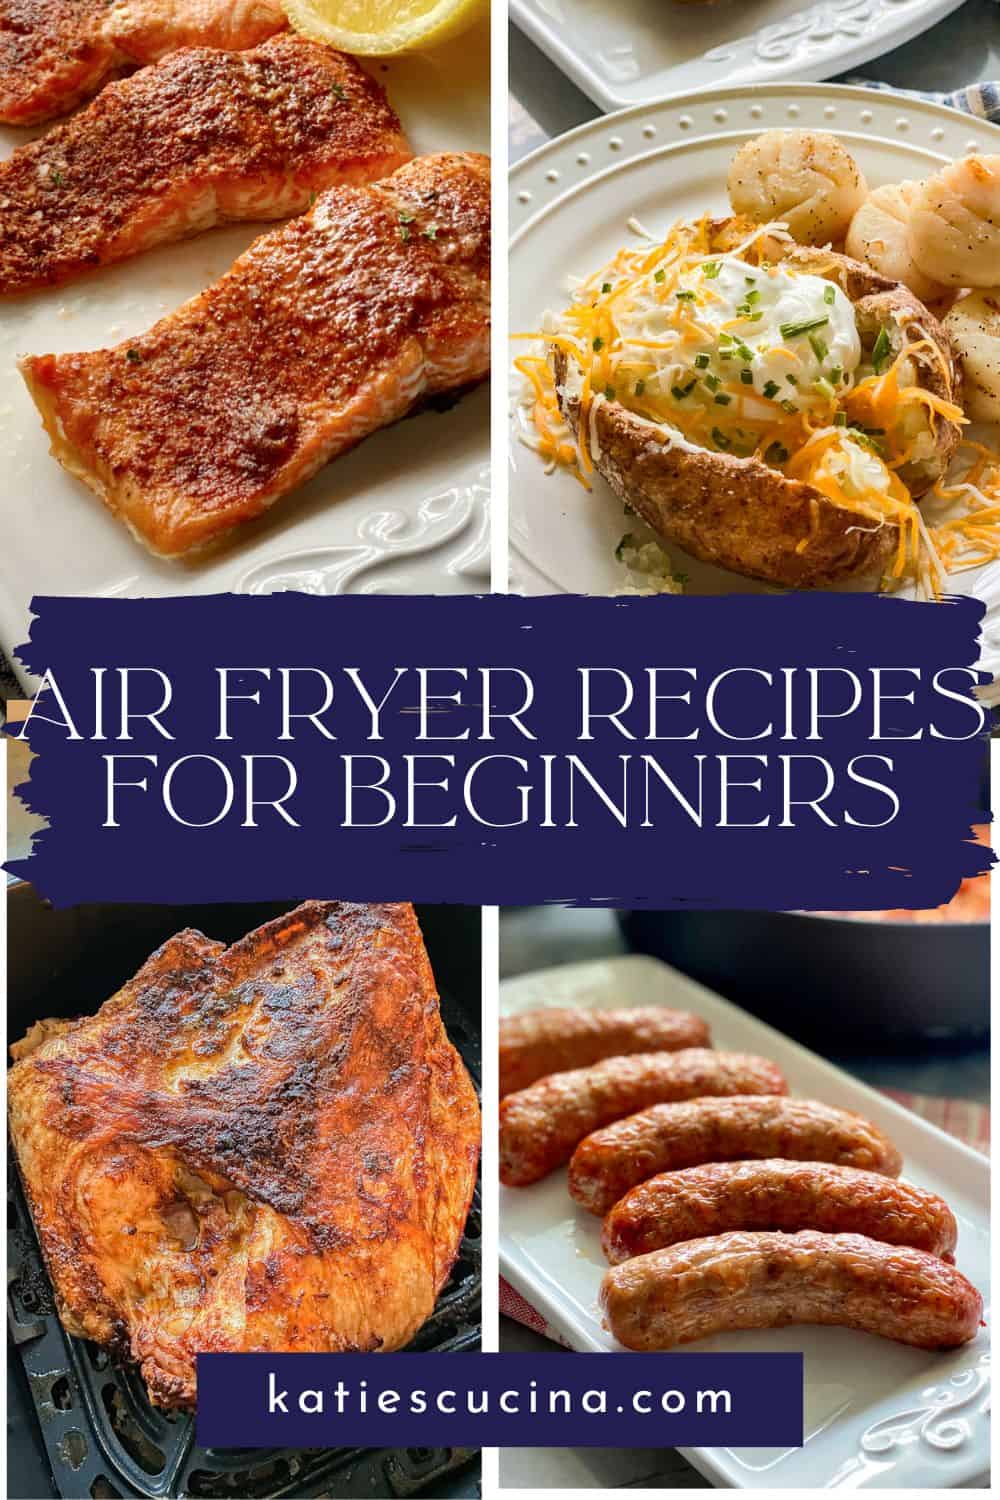 https://www.katiescucina.com/wp-content/uploads/2023/01/Air-Fryer-Recipes-for-Beginners.jpg